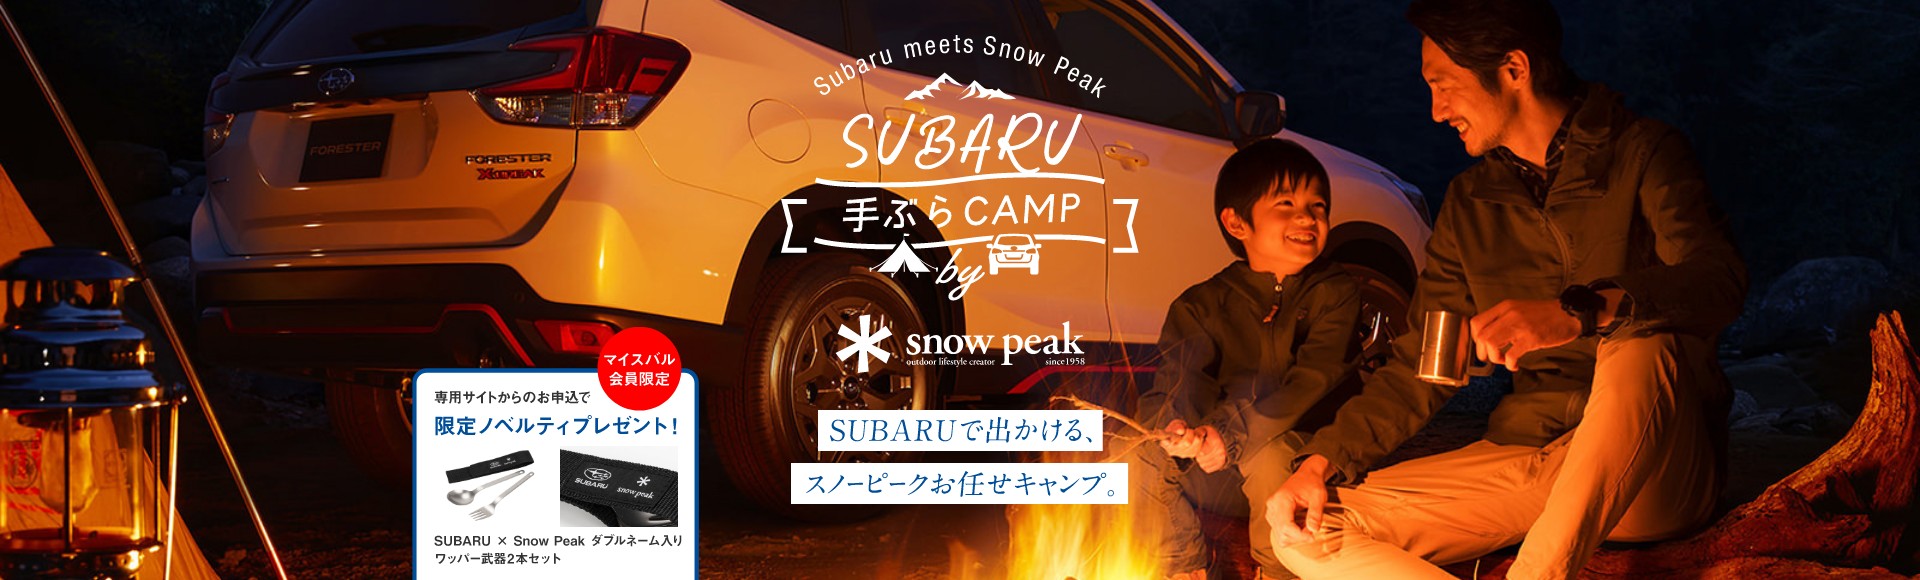 SUBARU ��Ԃ�CAMP by Snow Peak